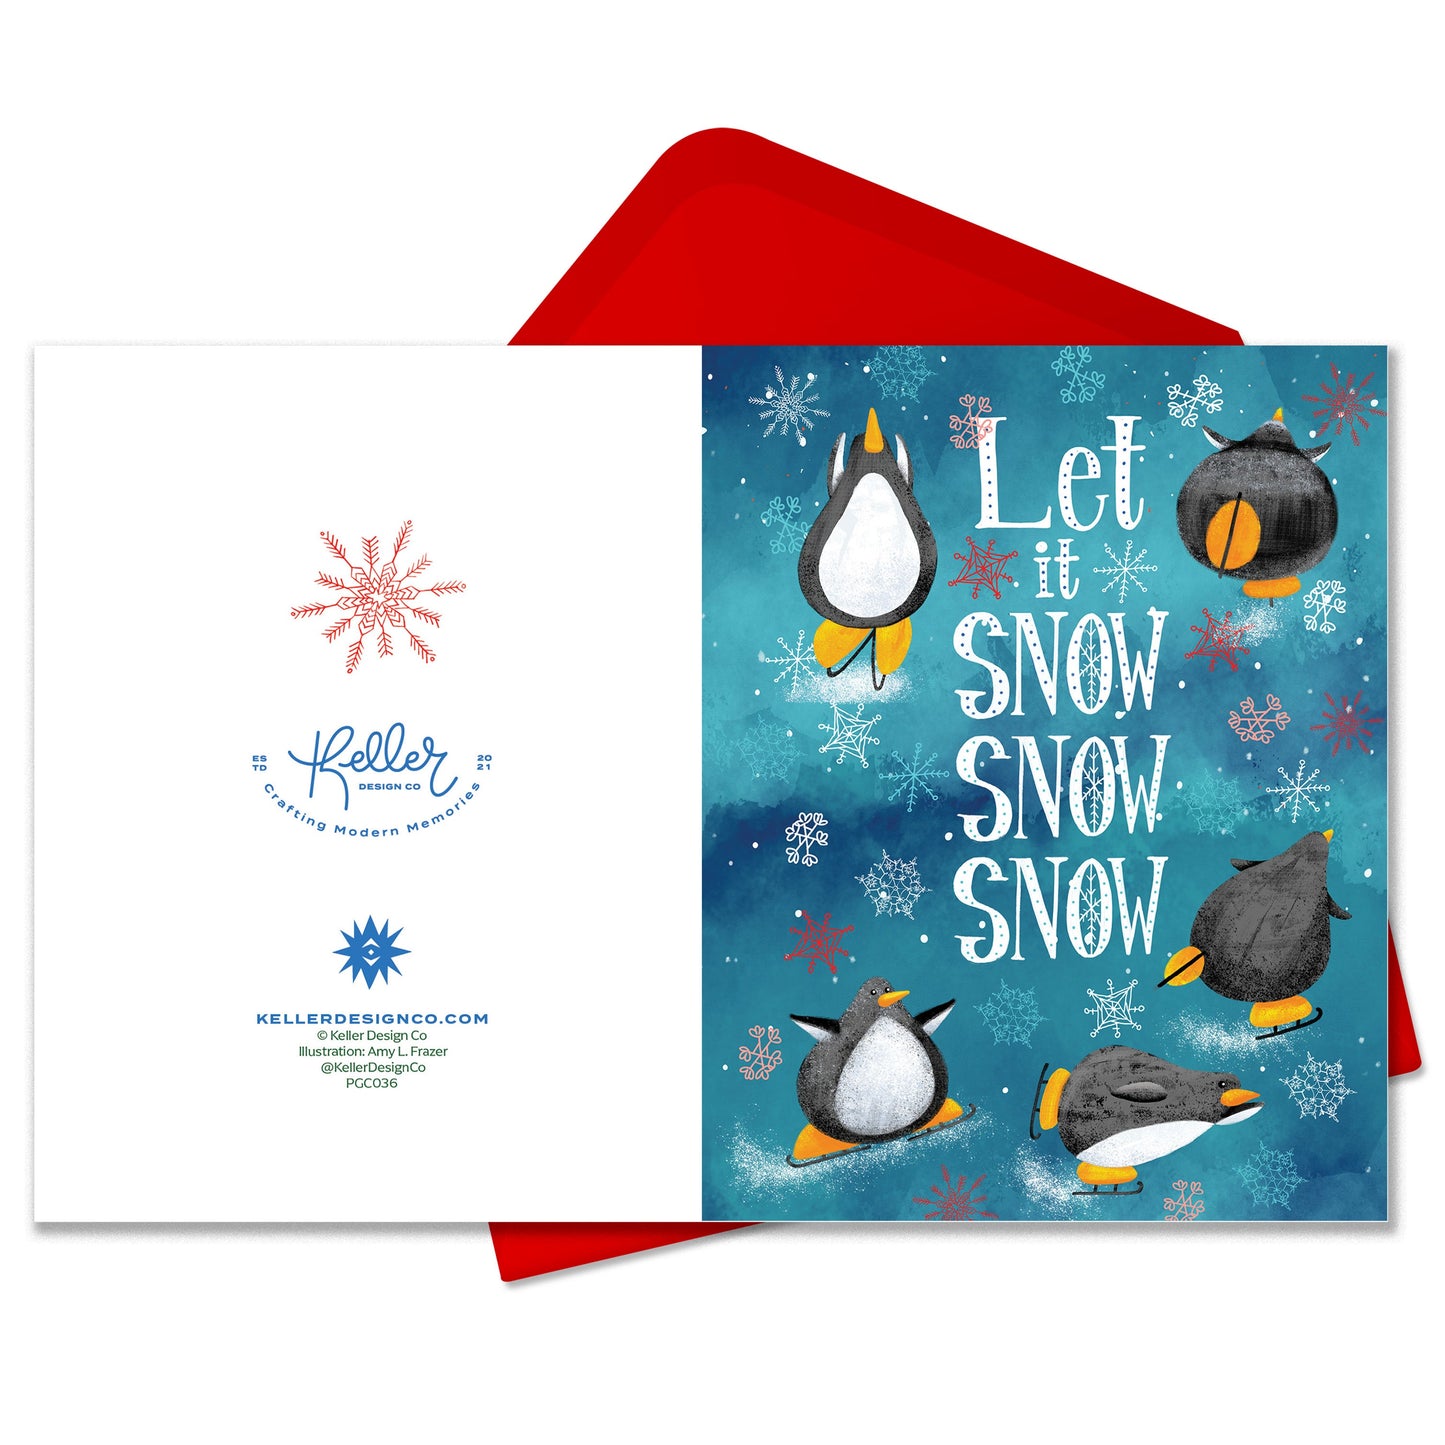 Let it Snow Snow Snow Penguins Greeting Card-Wholesale